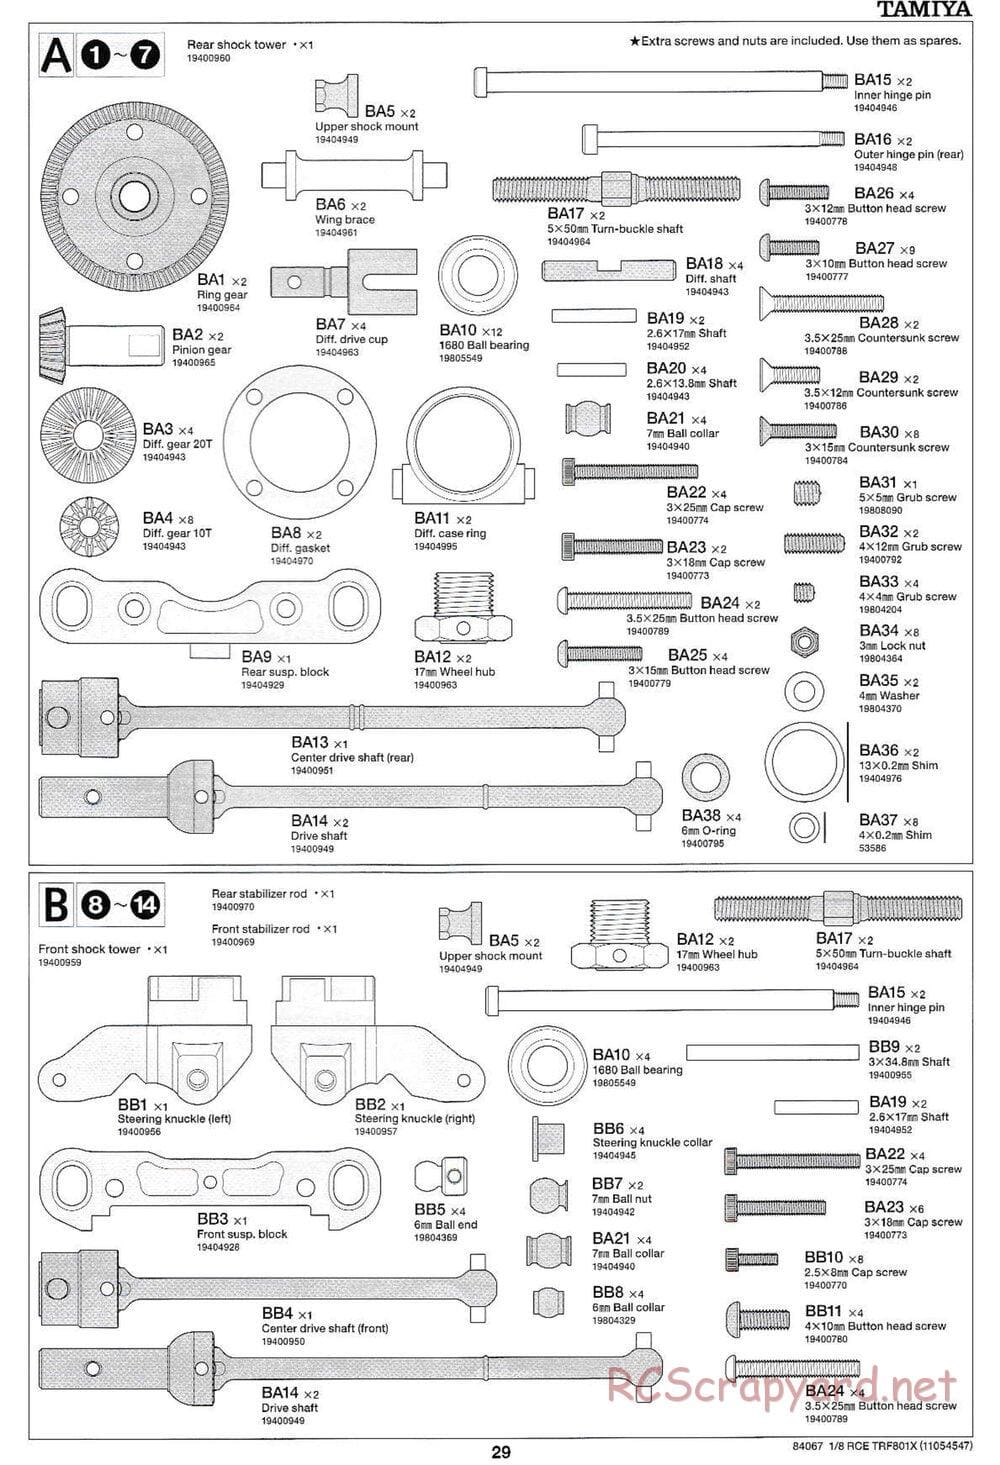 Tamiya - TRF801X Chassis - Manual - Page 29